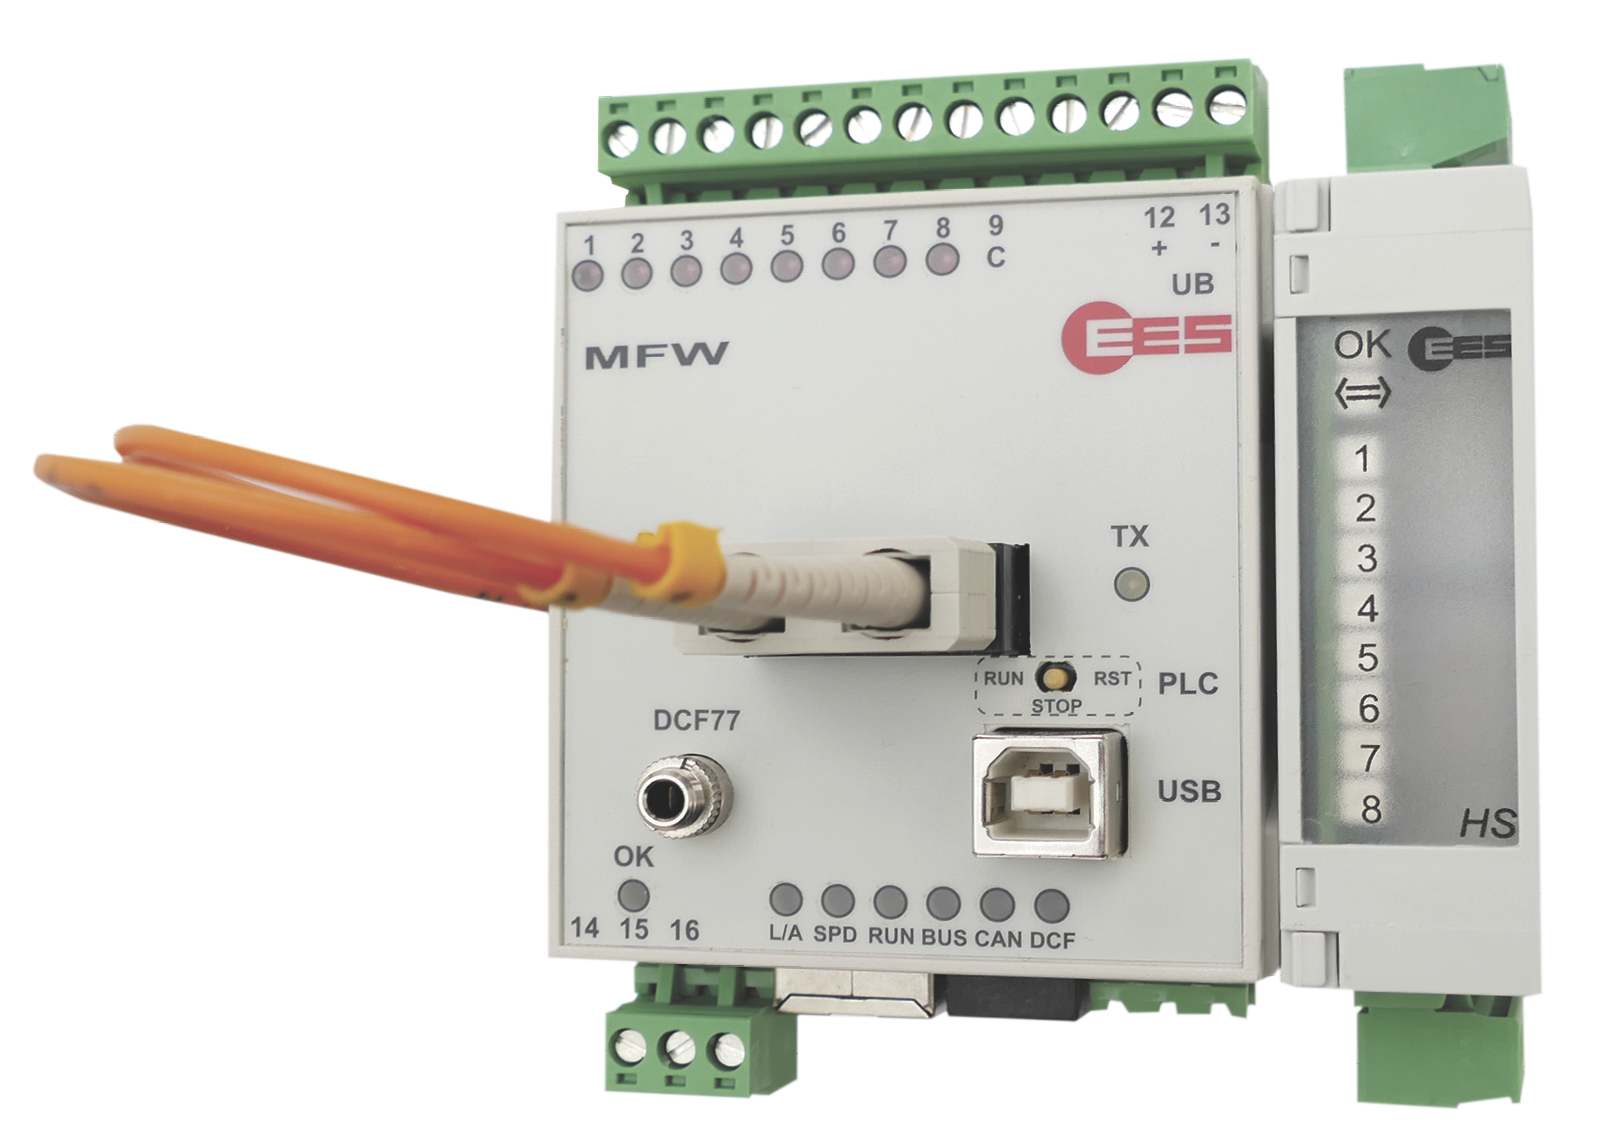 EES telecontrol MFW optical fiber